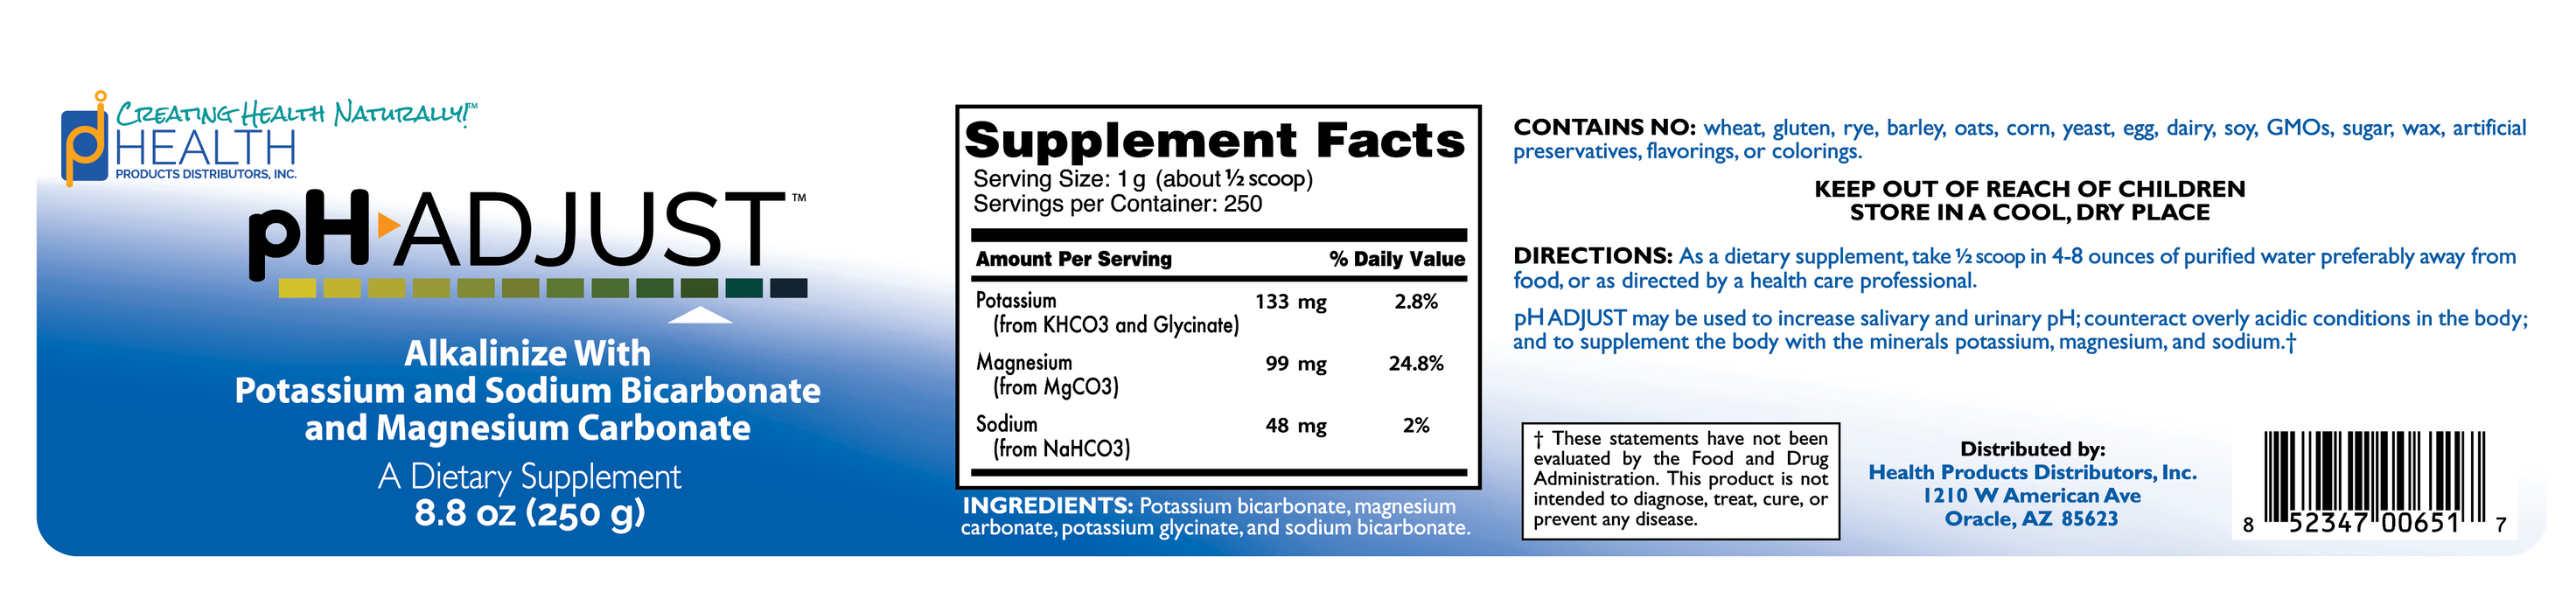 Health Products Distributors pH Adjust 250 servings